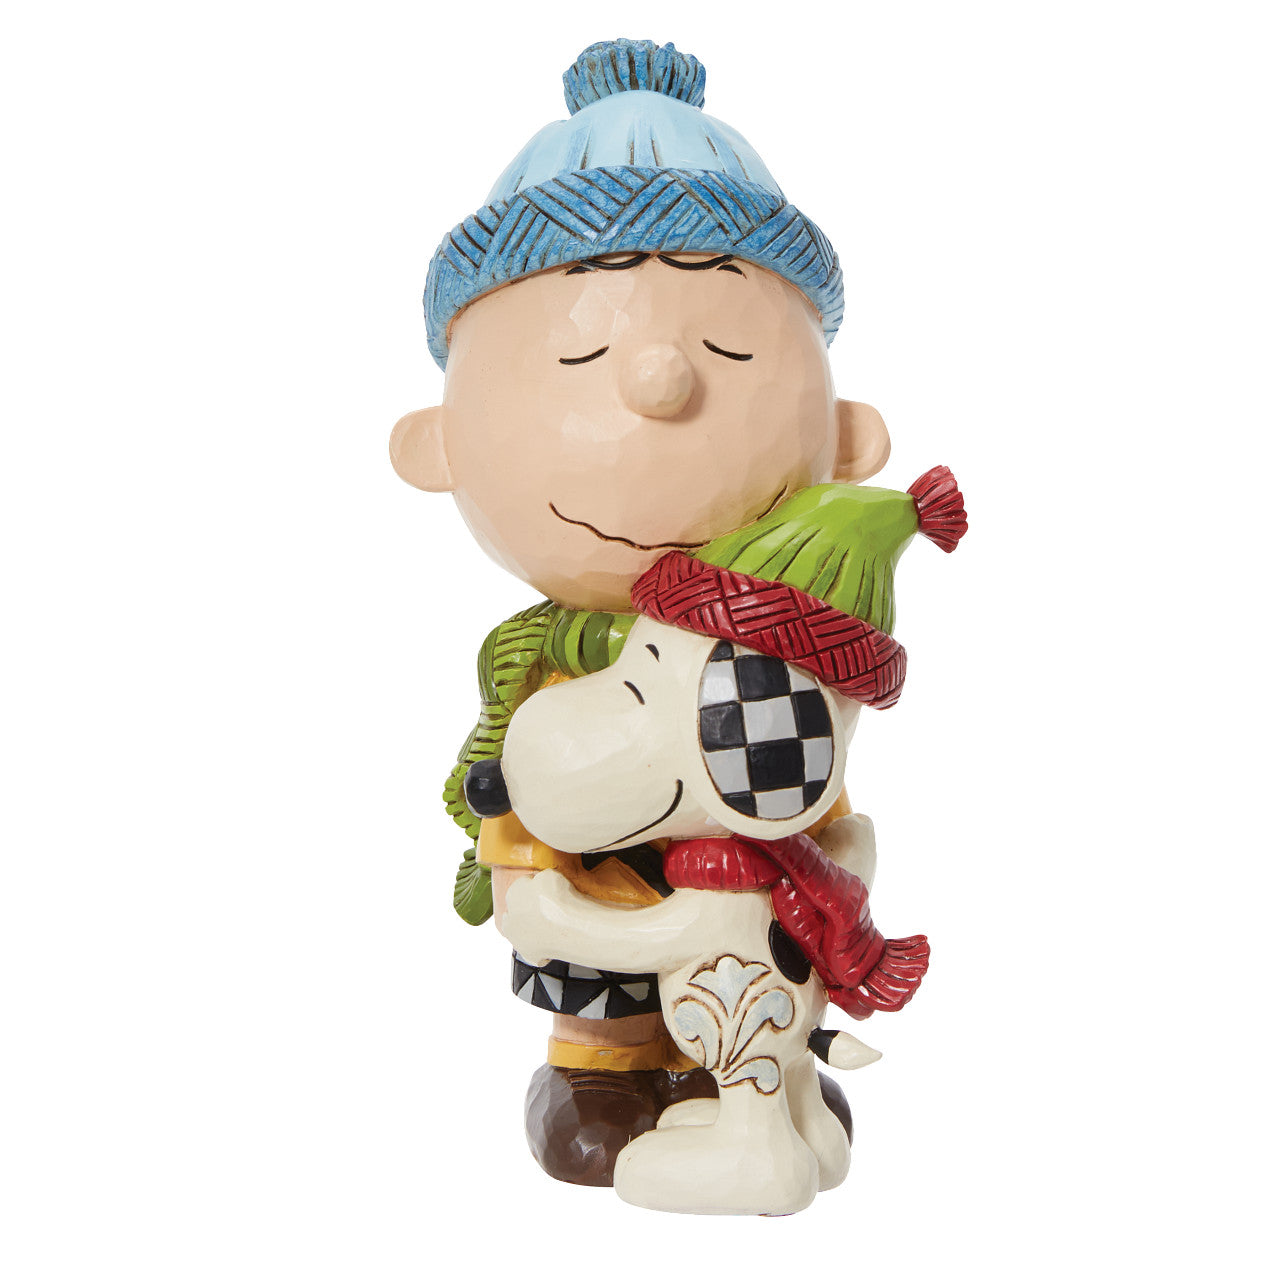 A Warm Hug (Snoopy & Charlie Brown Hugging)